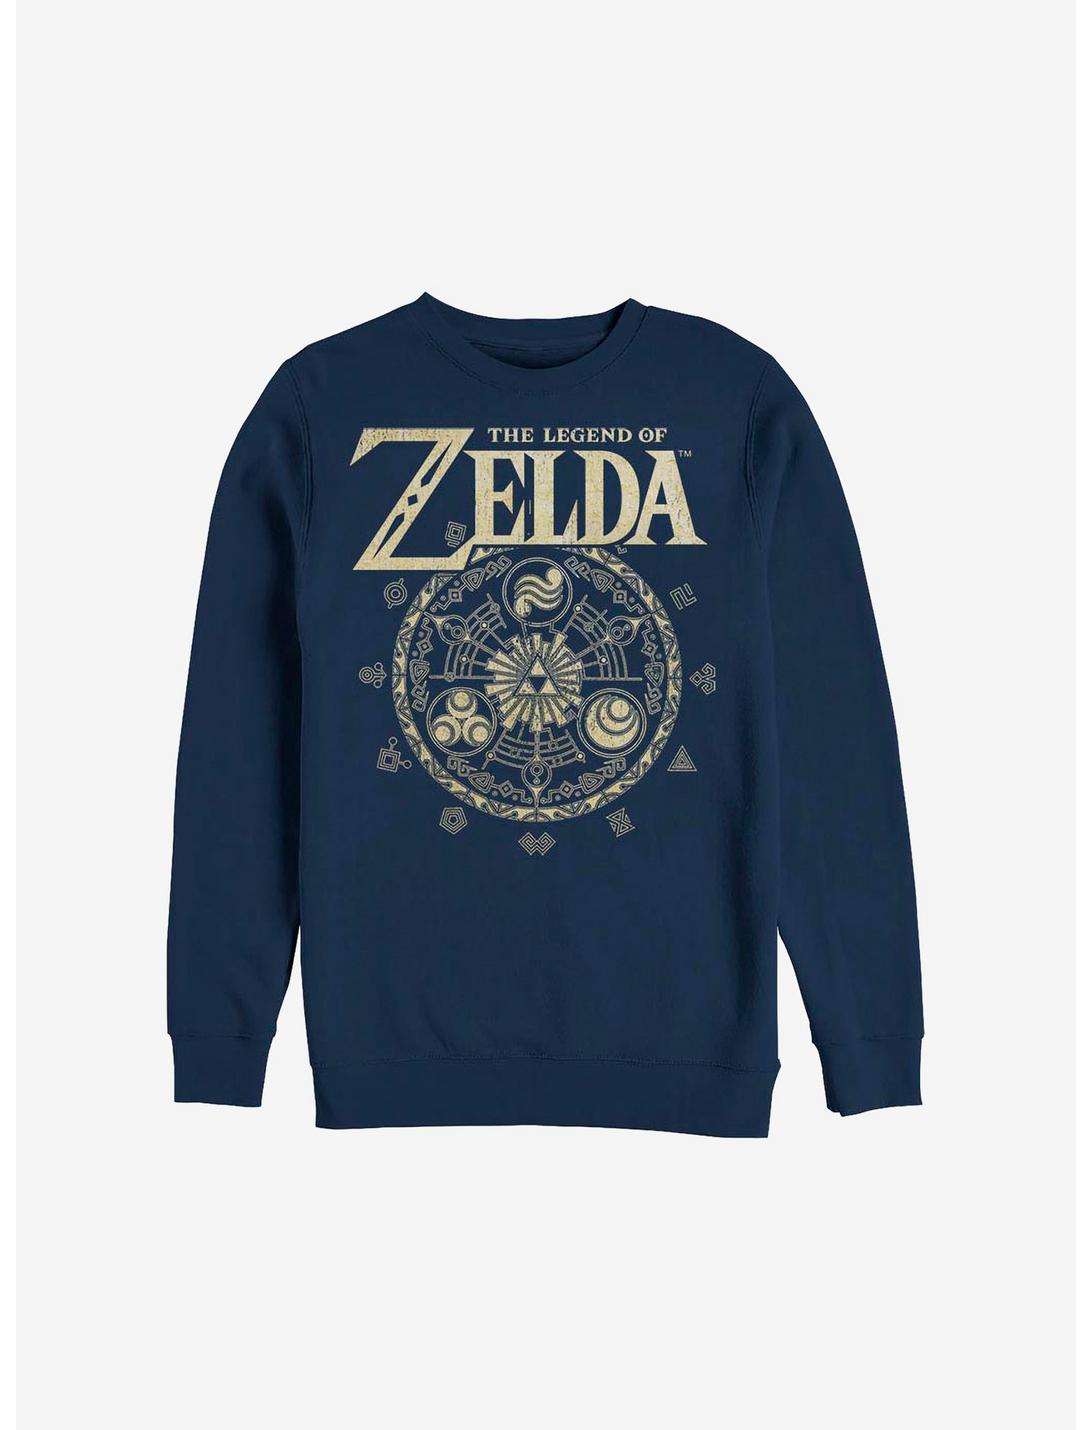 Nintendo The Legend Of Zelda Emblem Cir Crew Sweatshirt, NAVY, hi-res